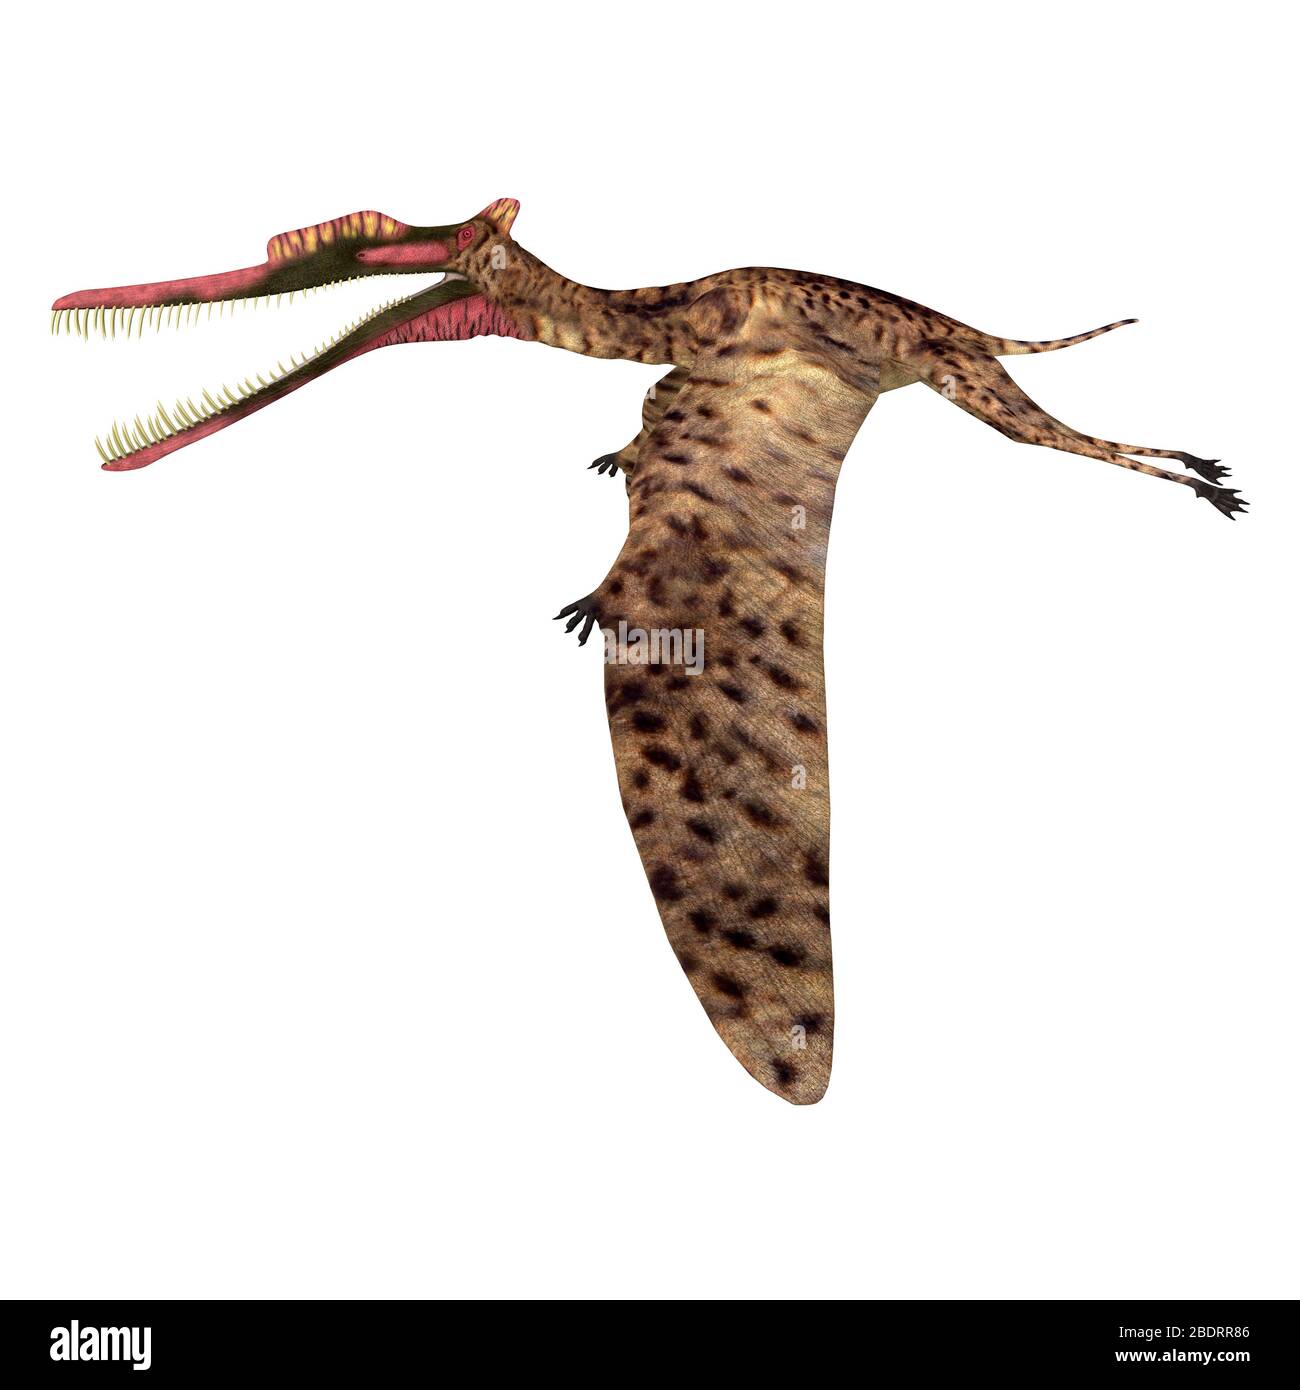 Soaring Ordosipterus #earlycretaceous #mesozoic #pterosauria # pterodactyloidea #dsungaripteridae #ordosipterus #china by: @pnsozcyy